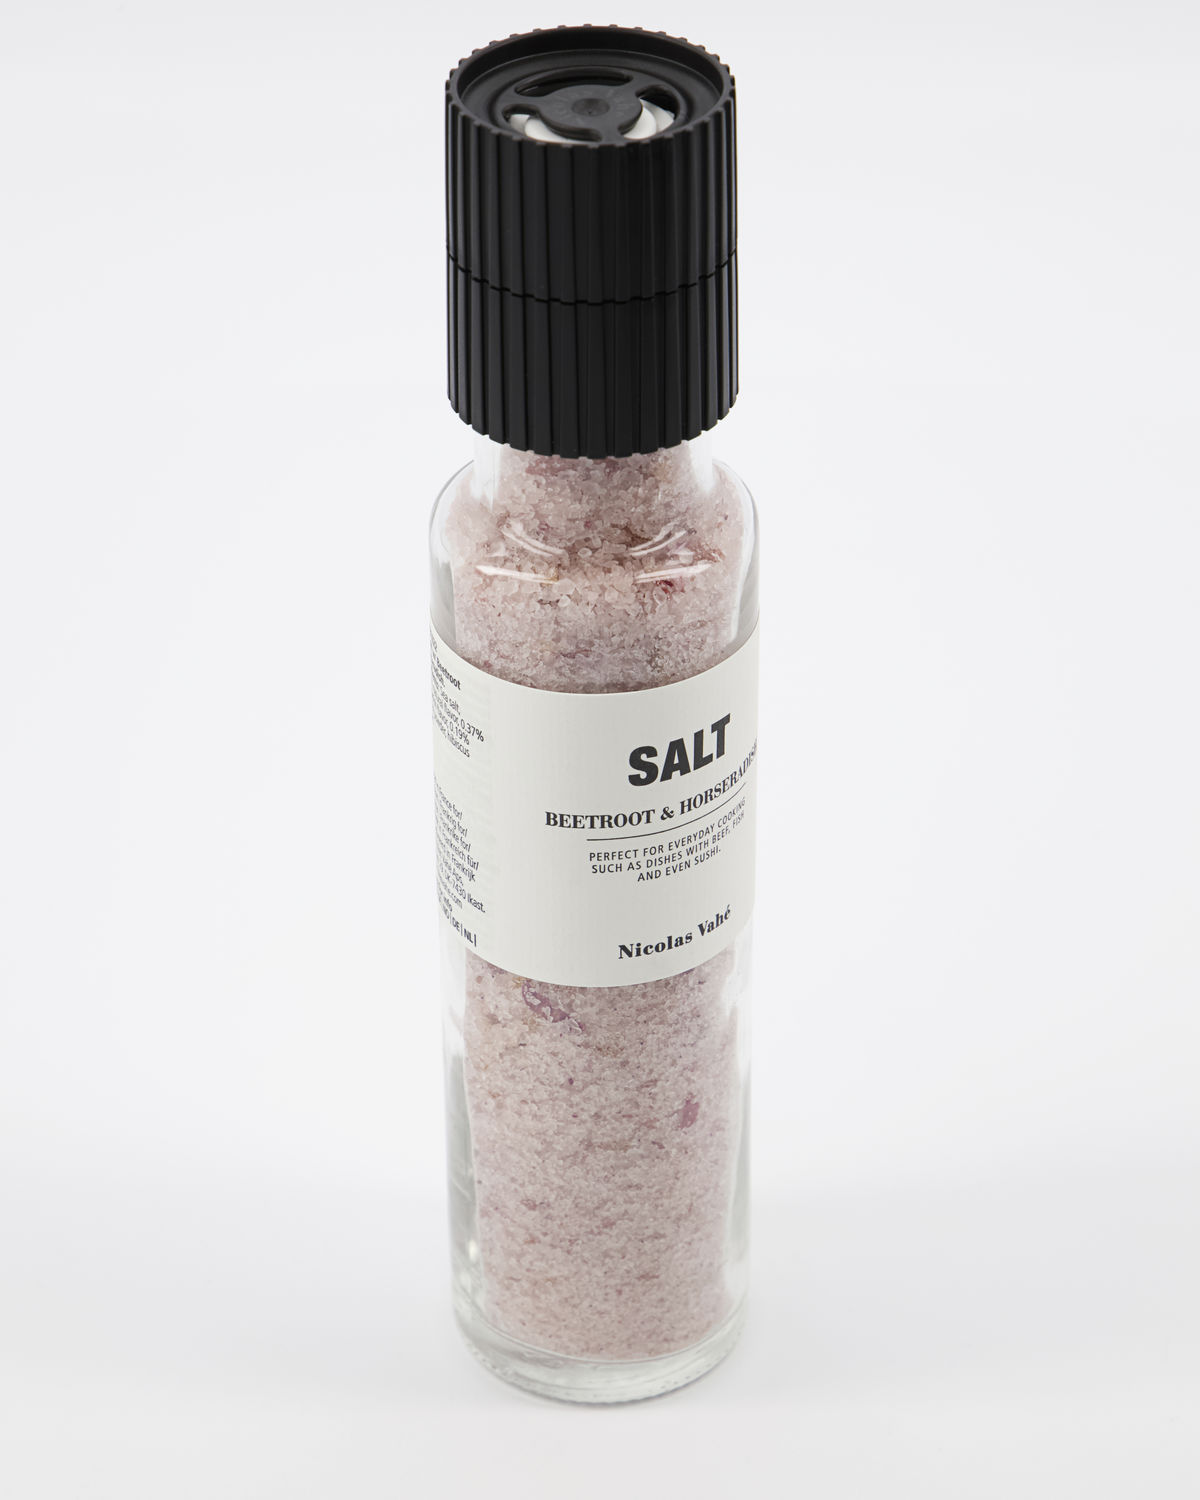 Salt, Beetroot & Horseradish, 310 g.